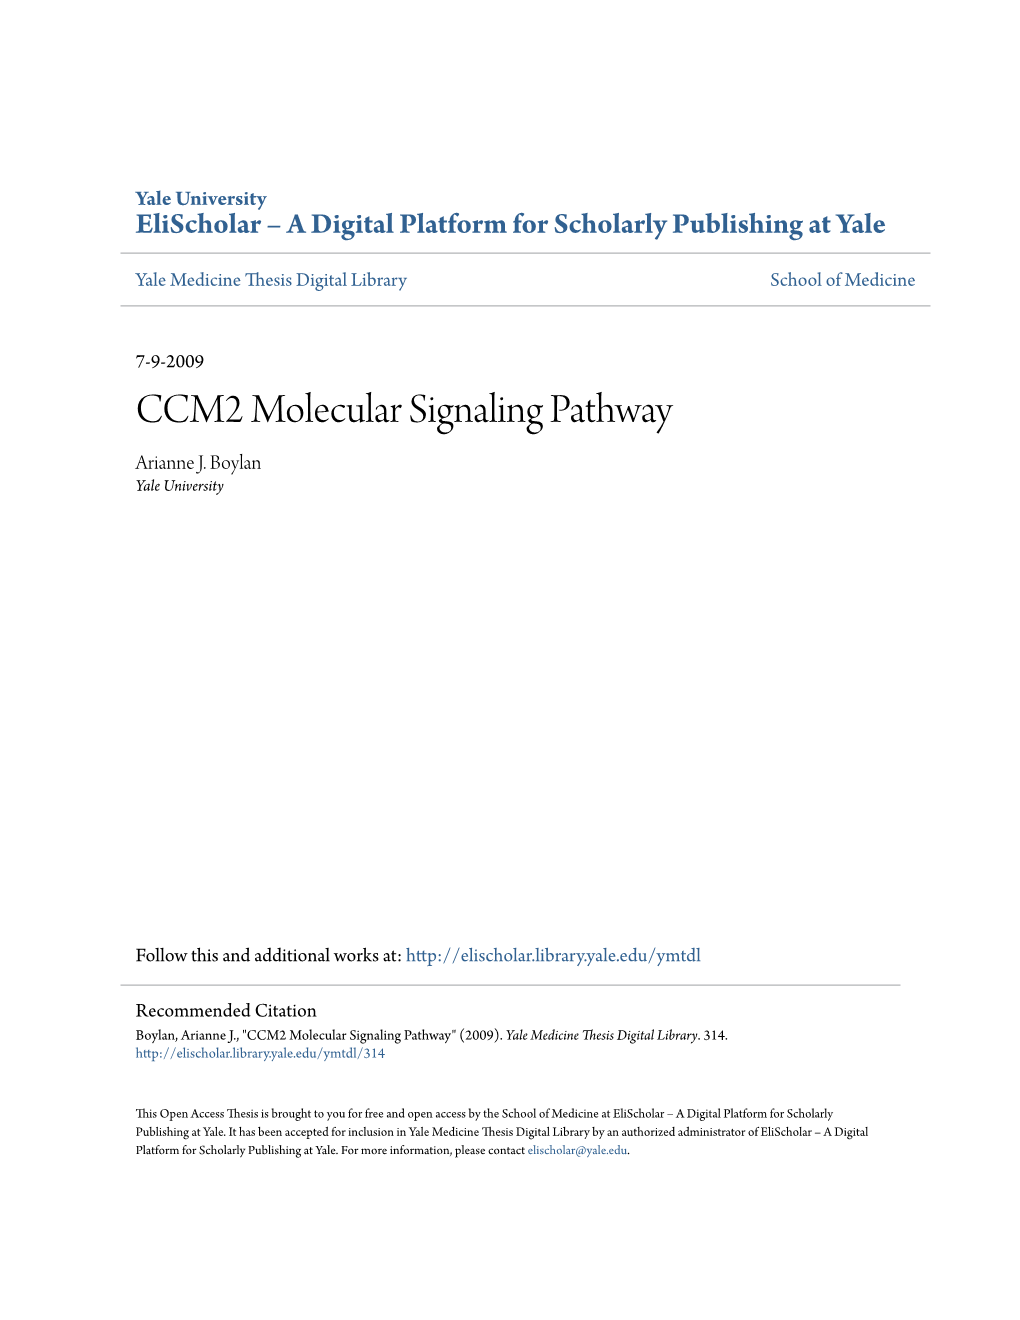 CCM2 Molecular Signaling Pathway Arianne J